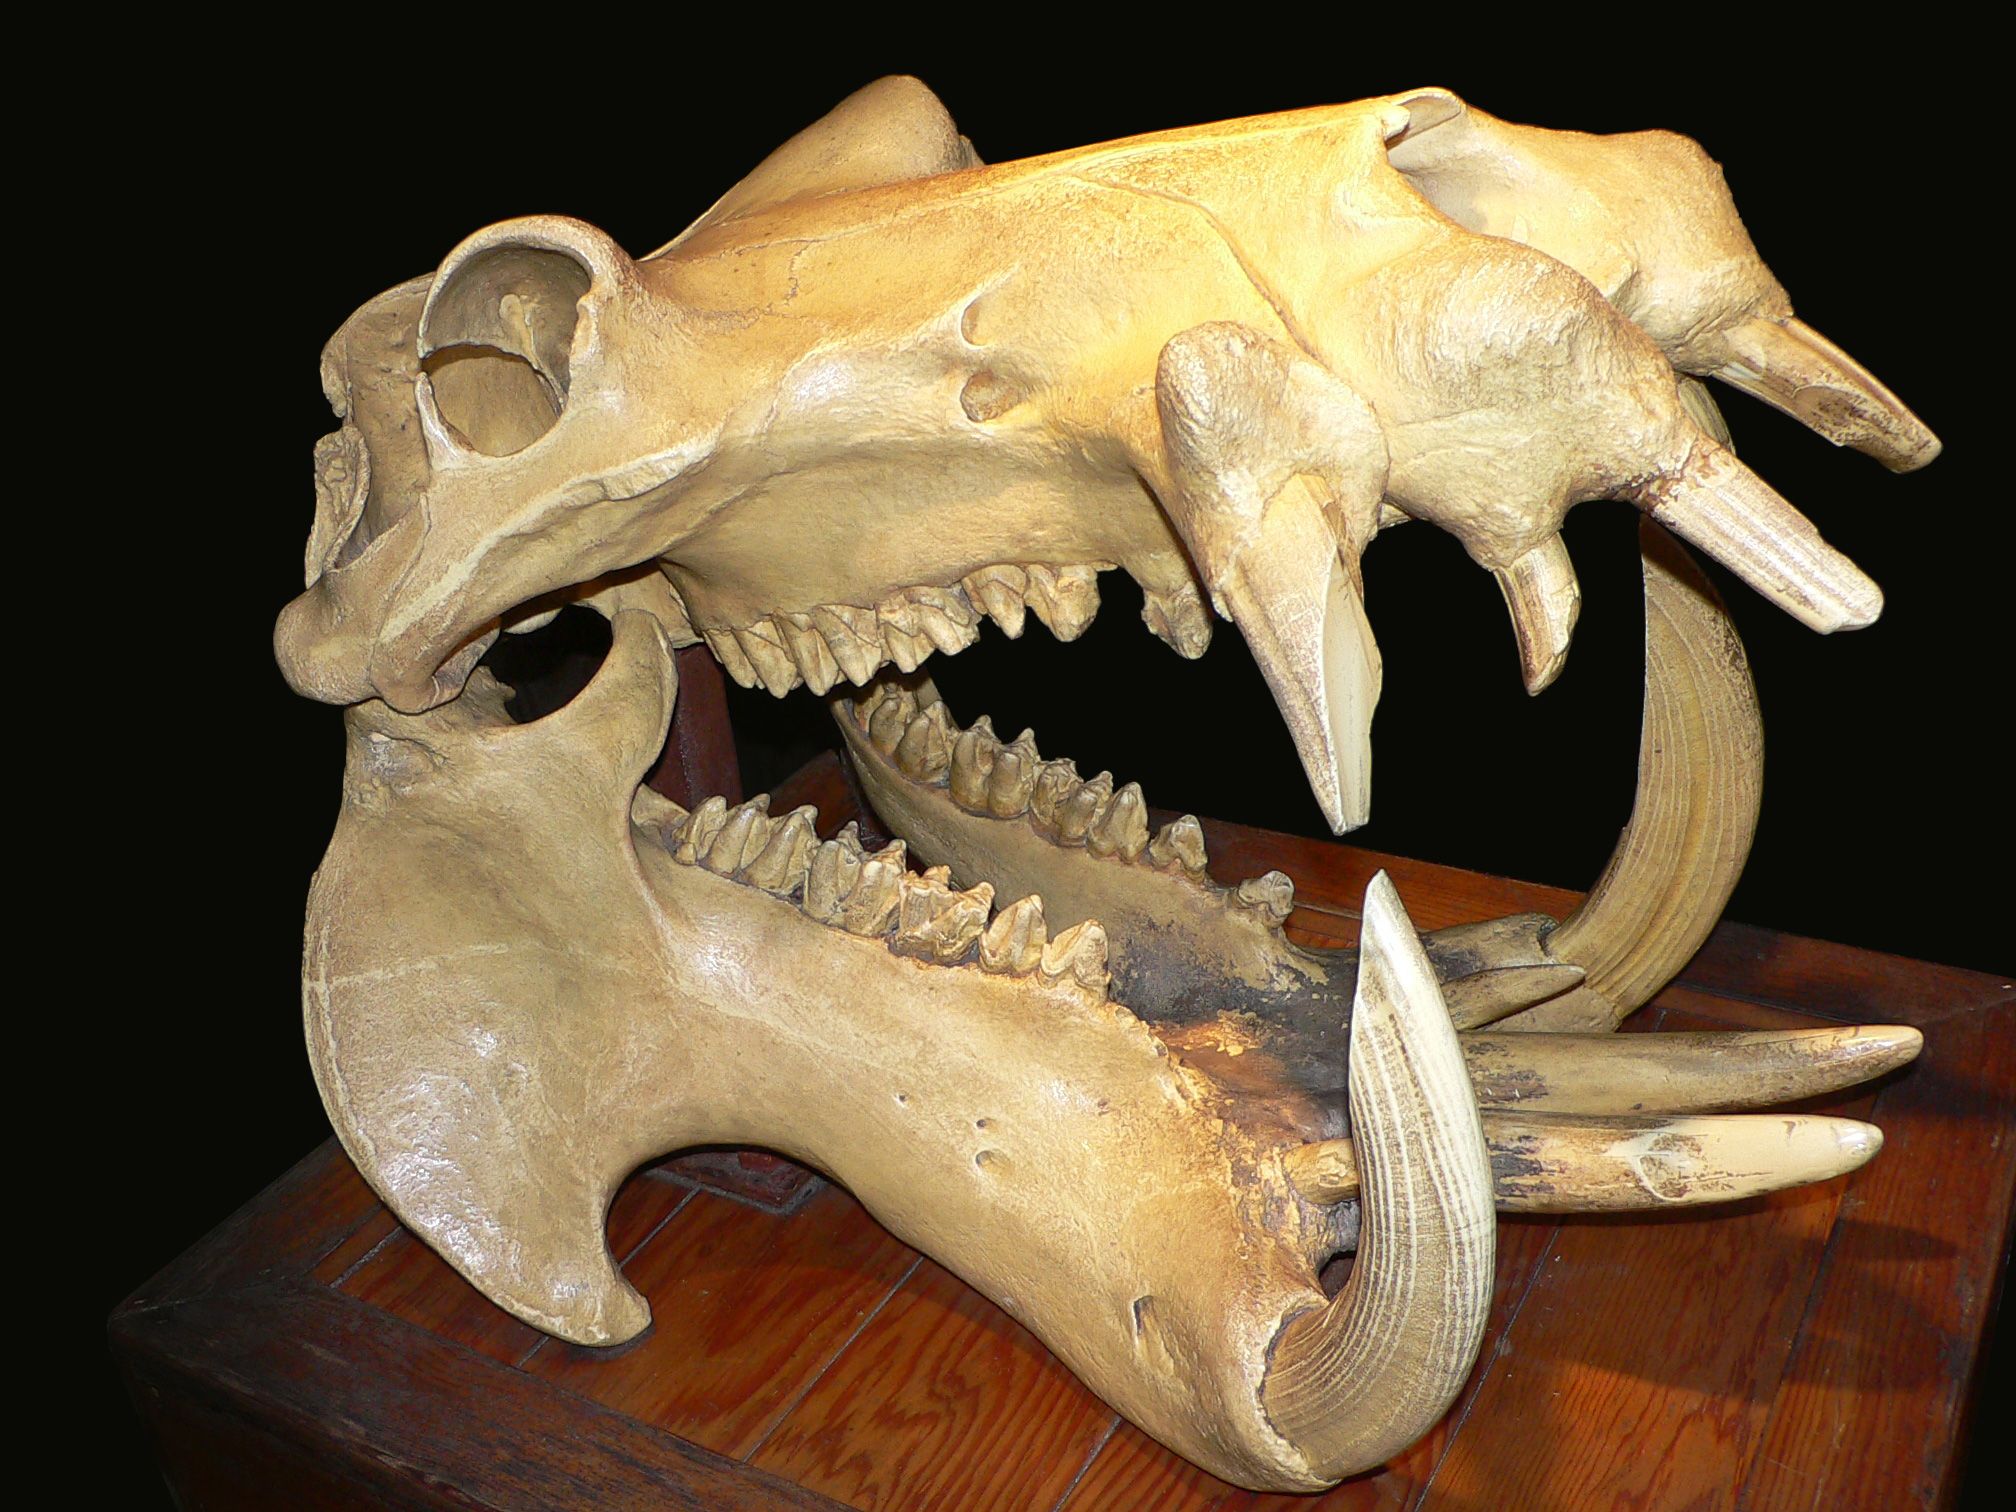 dinosaur skull - Google Search | Fossils | Pinterest | Fossils and ...